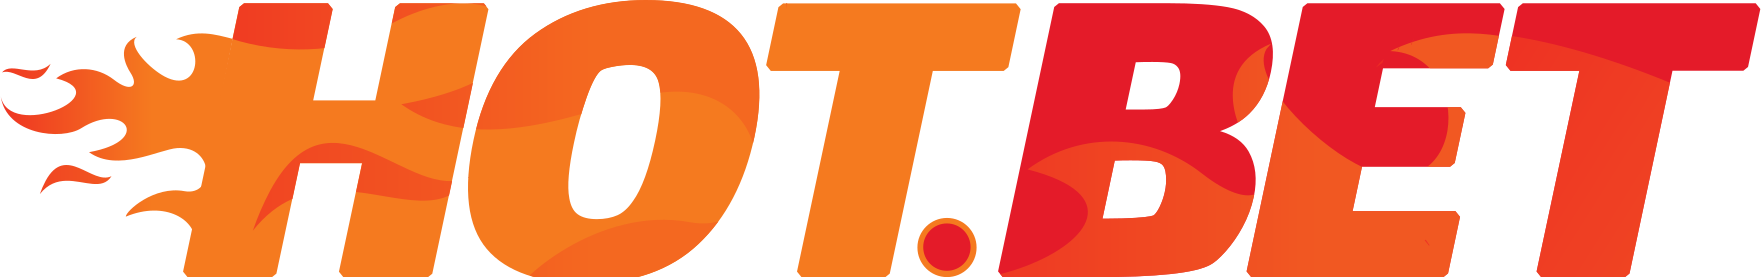 Hot.bet logo